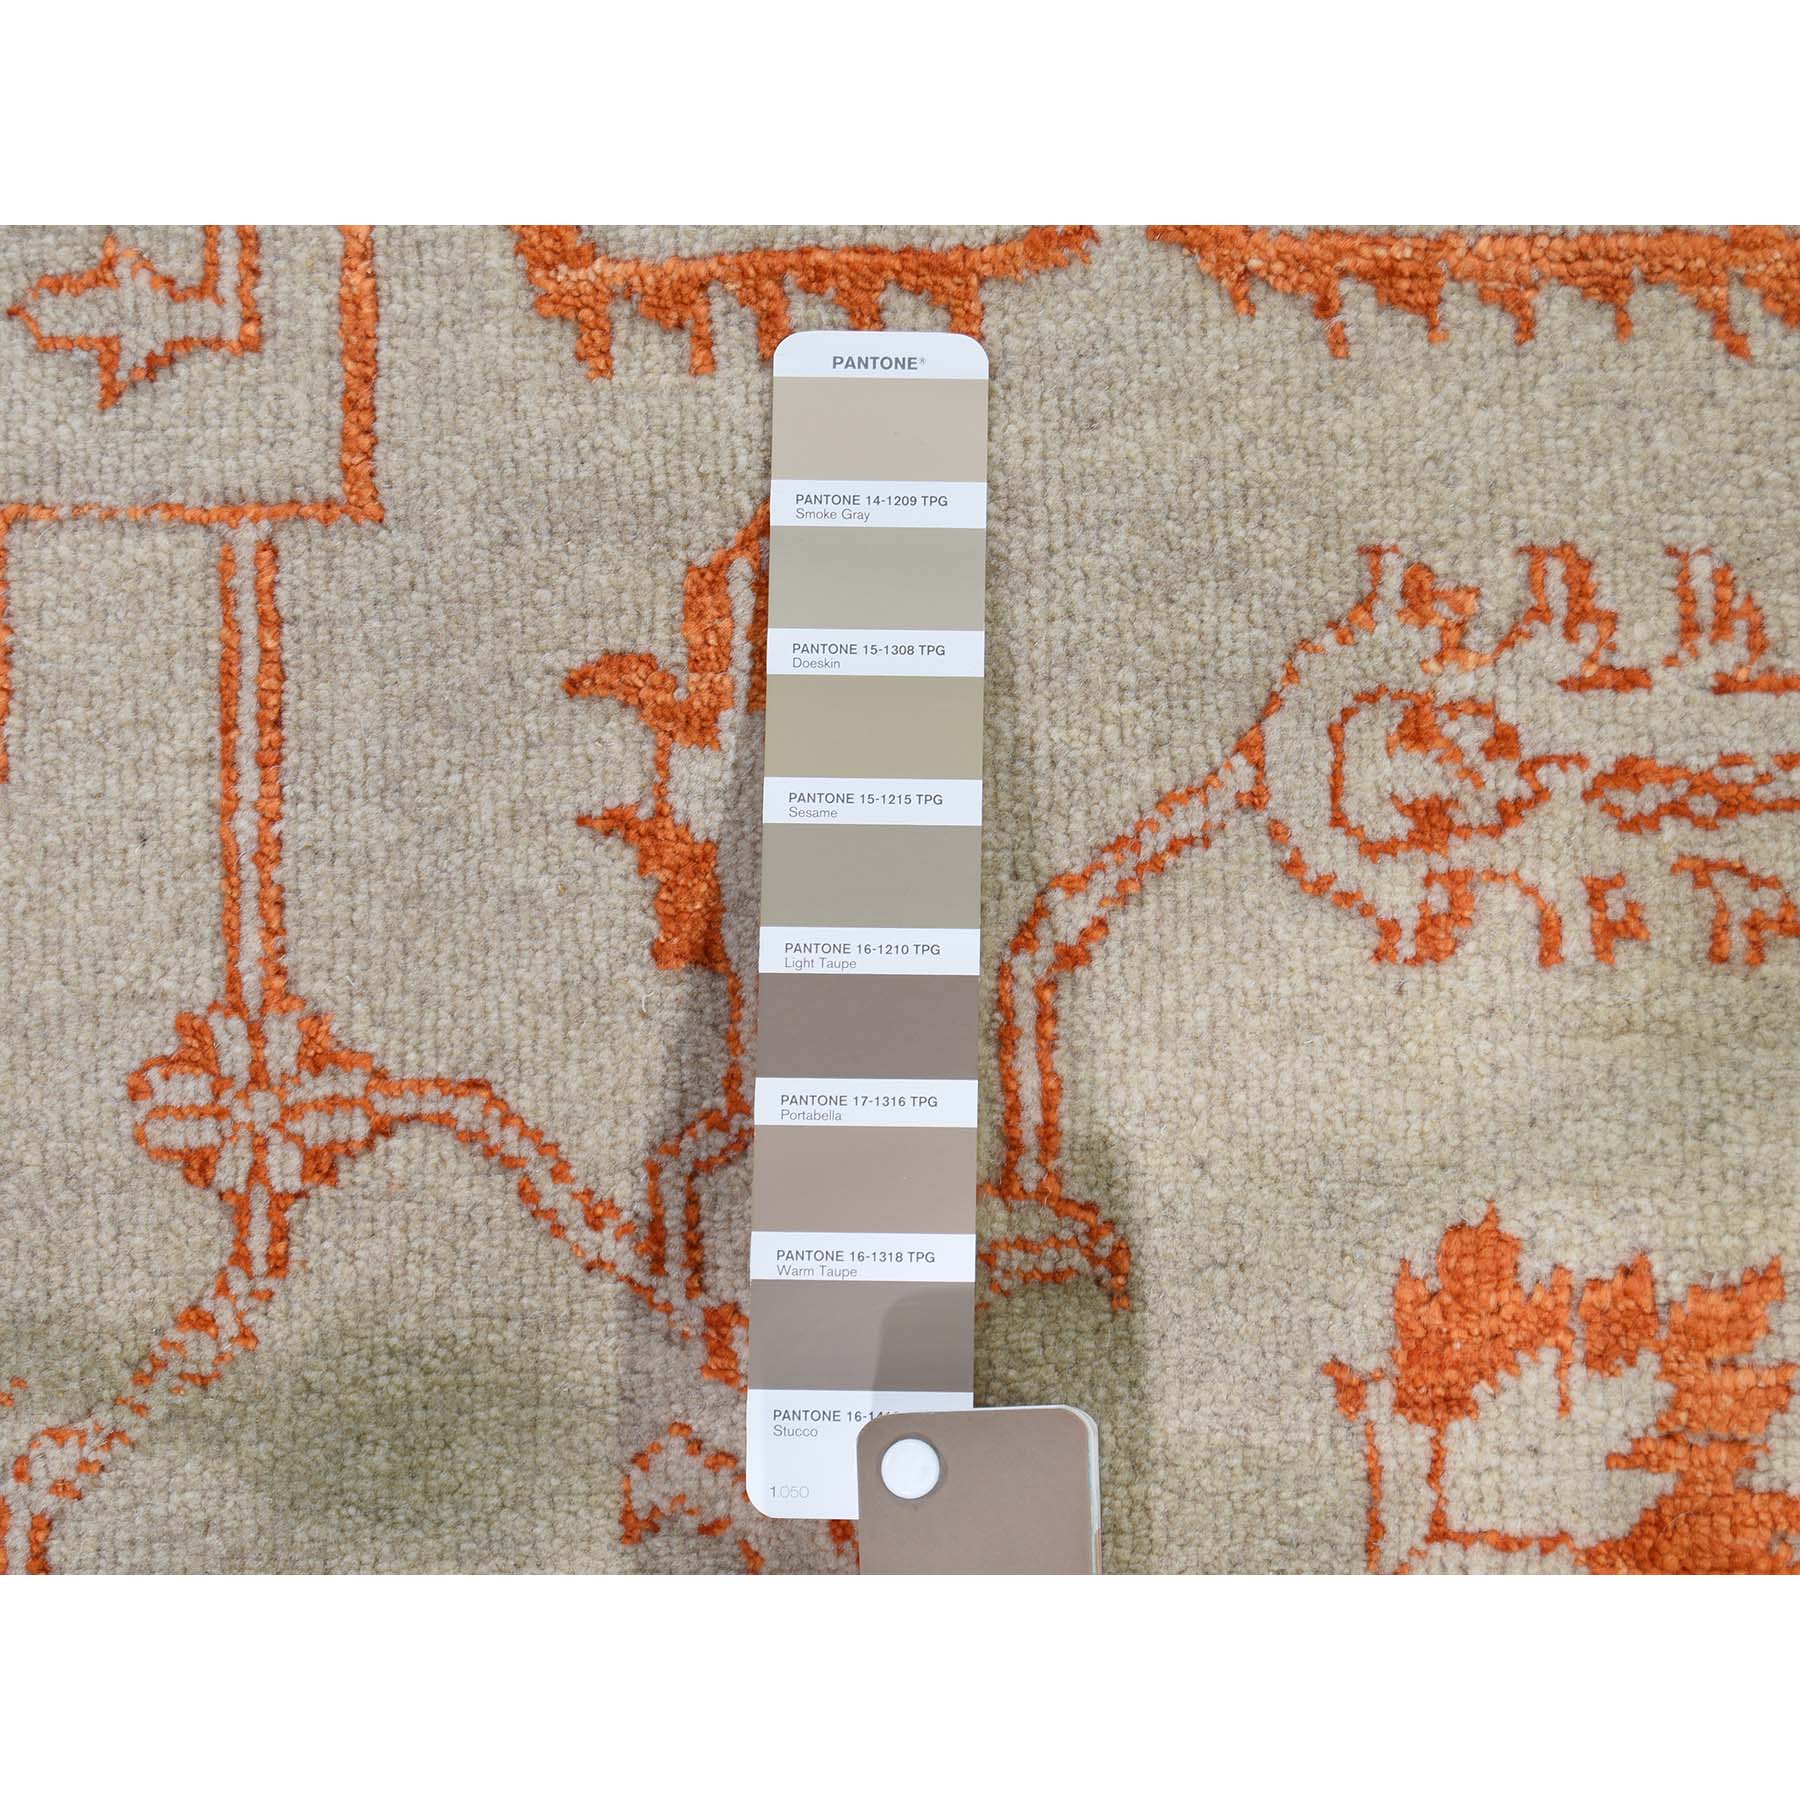 7-10 x10- Wool and Silk Heriz Broken Design Hand-Knotted Oriental Rug 